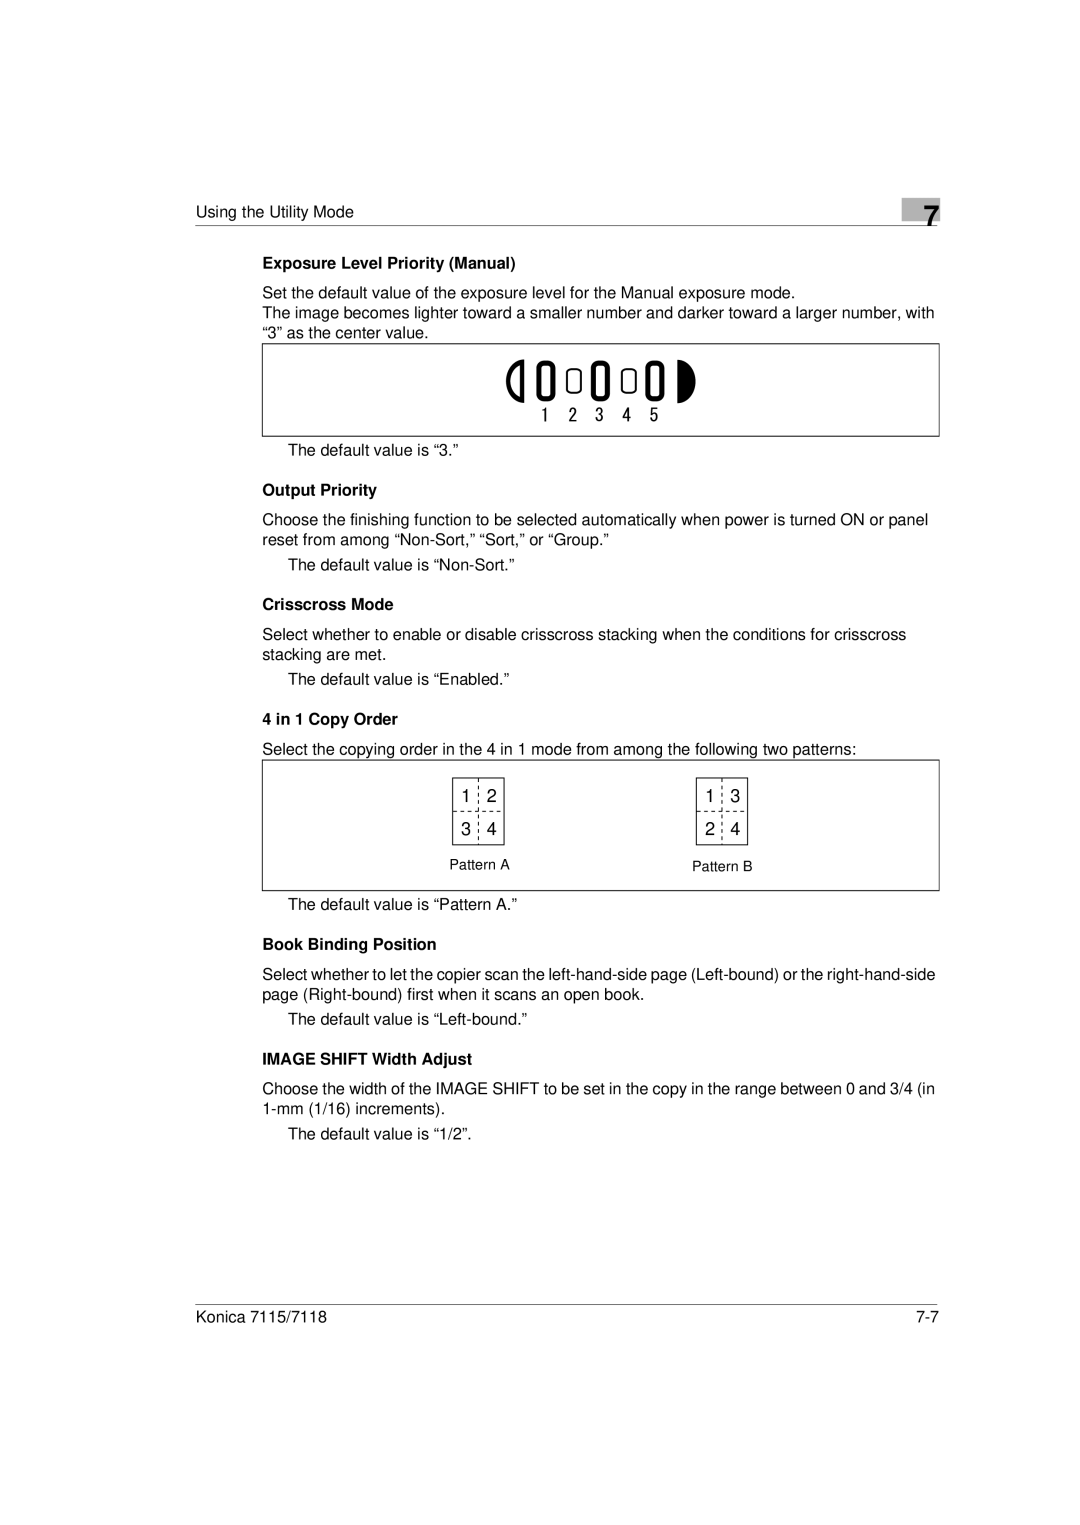 Konica Minolta Printer Copier manual Exposure Level Priority Manual, Output Priority, Crisscross Mode, Copy Order 